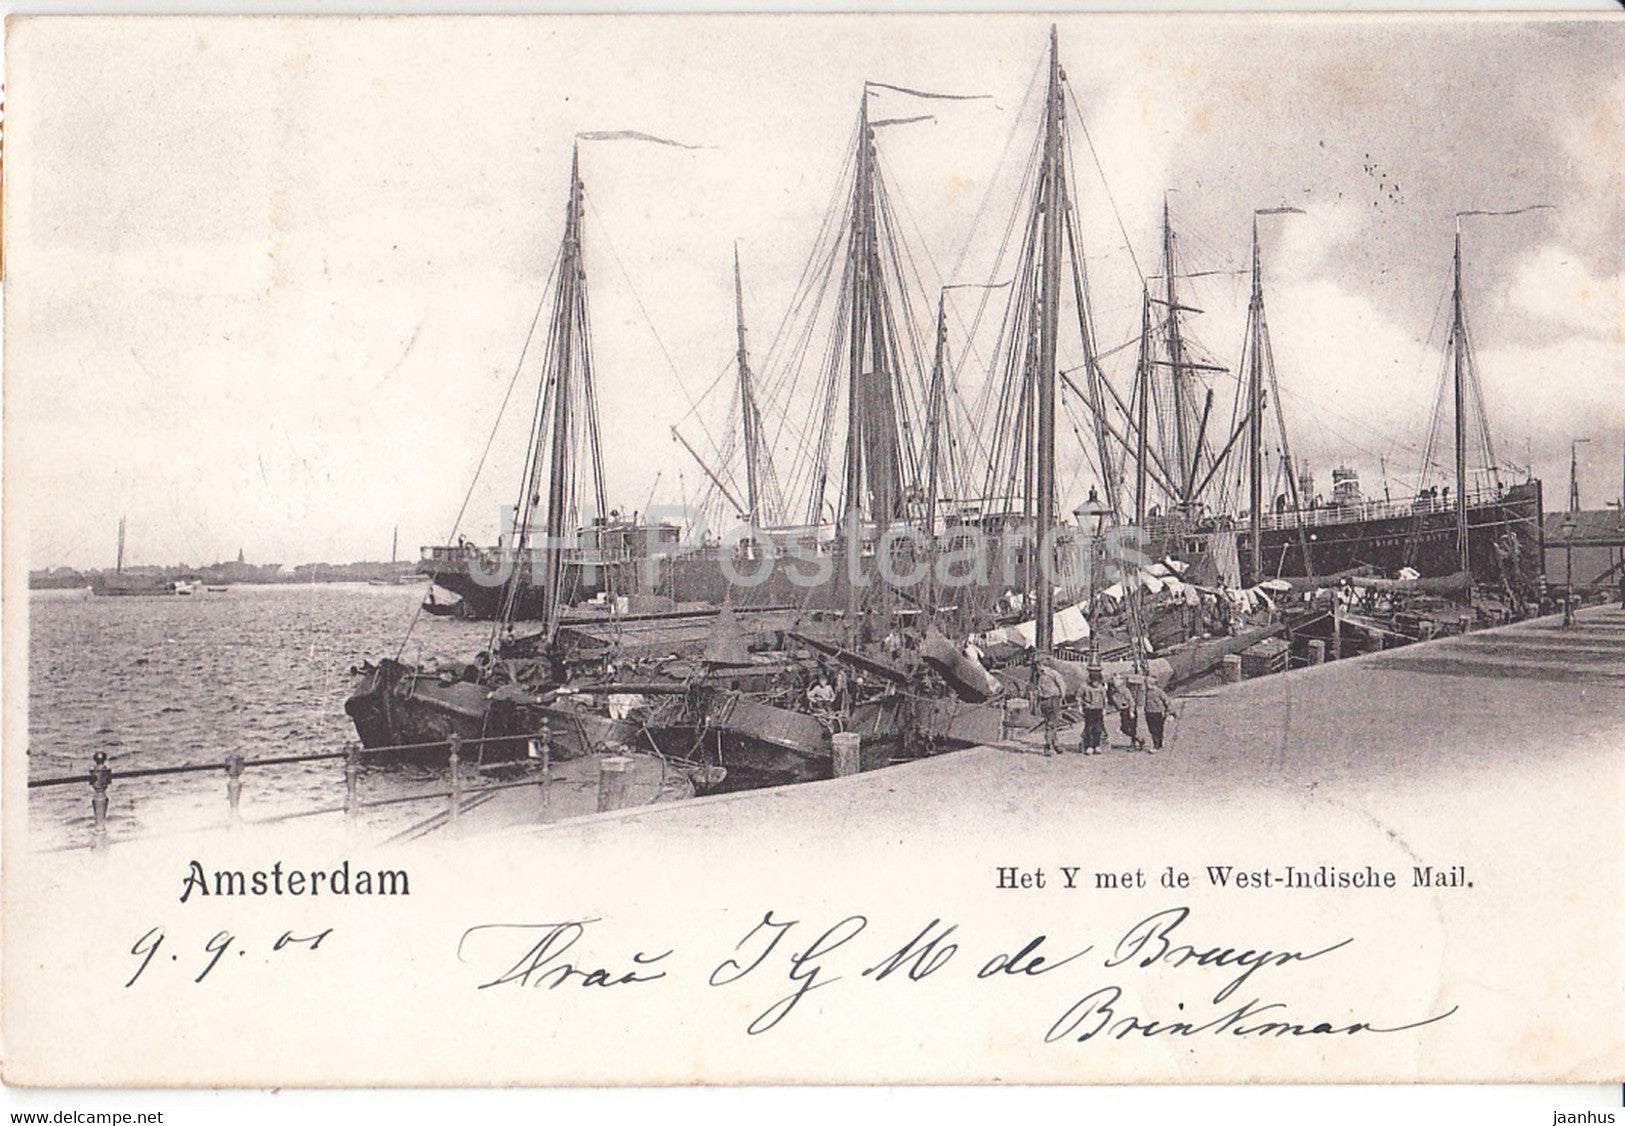 Amsterdam - Het Y  met de West Indische Mail - ship - old postcard - 1901 - Netherlands - used - JH Postcards